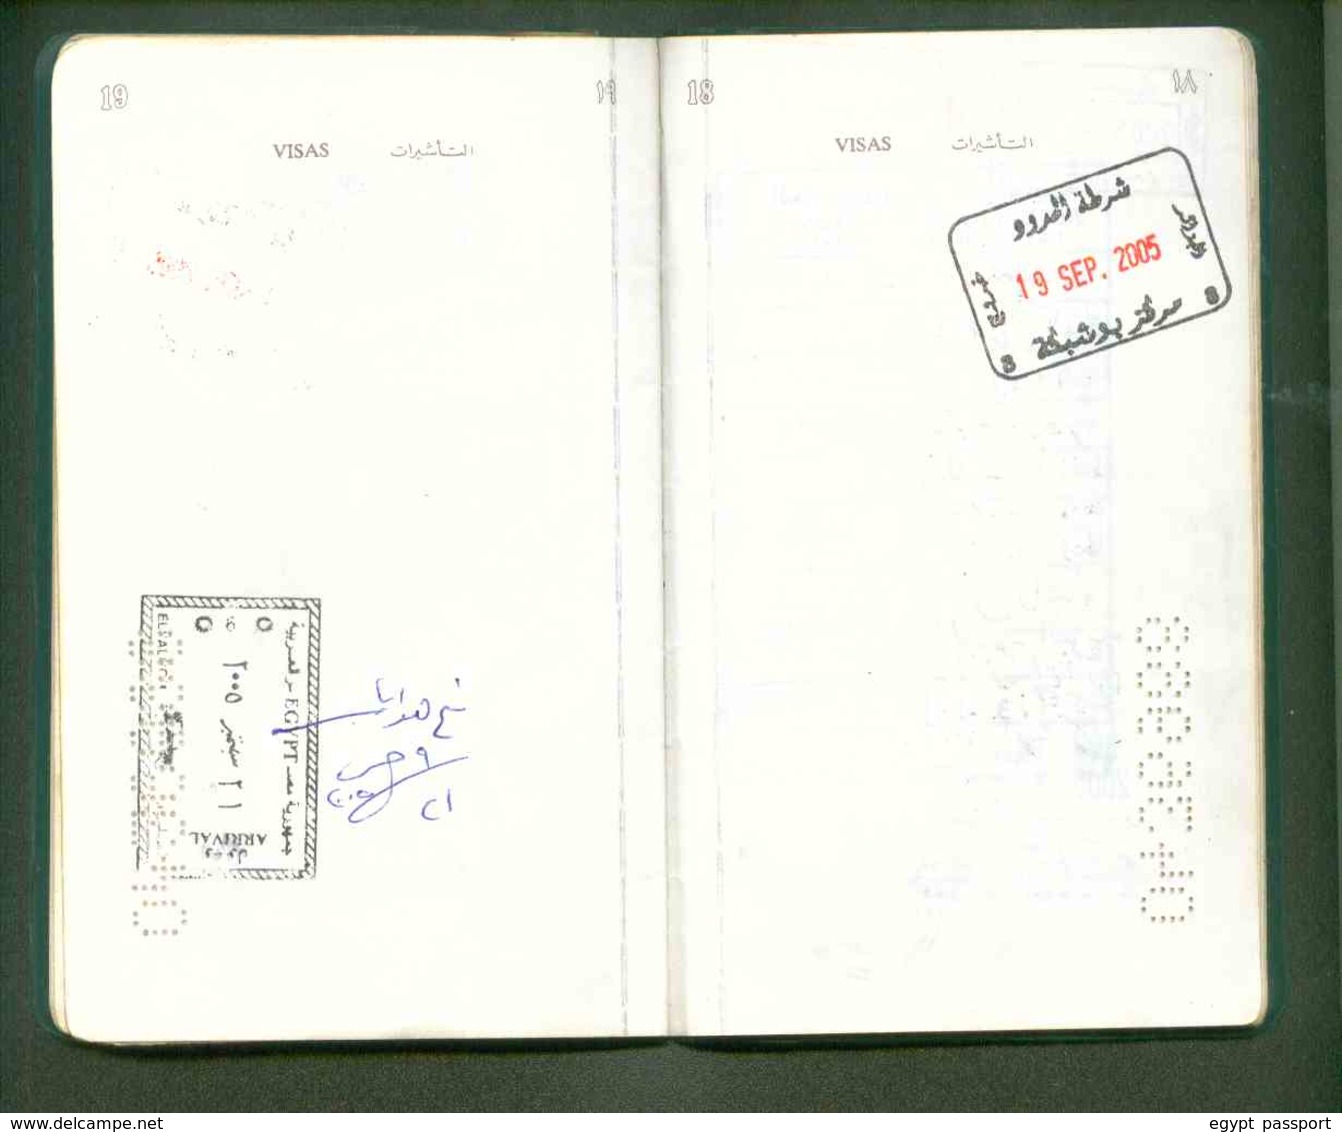 Egypt Passport Issue 2002 - Visa Saudi Arabia - Qatar - Algeria - Tunis - Condition as in scan